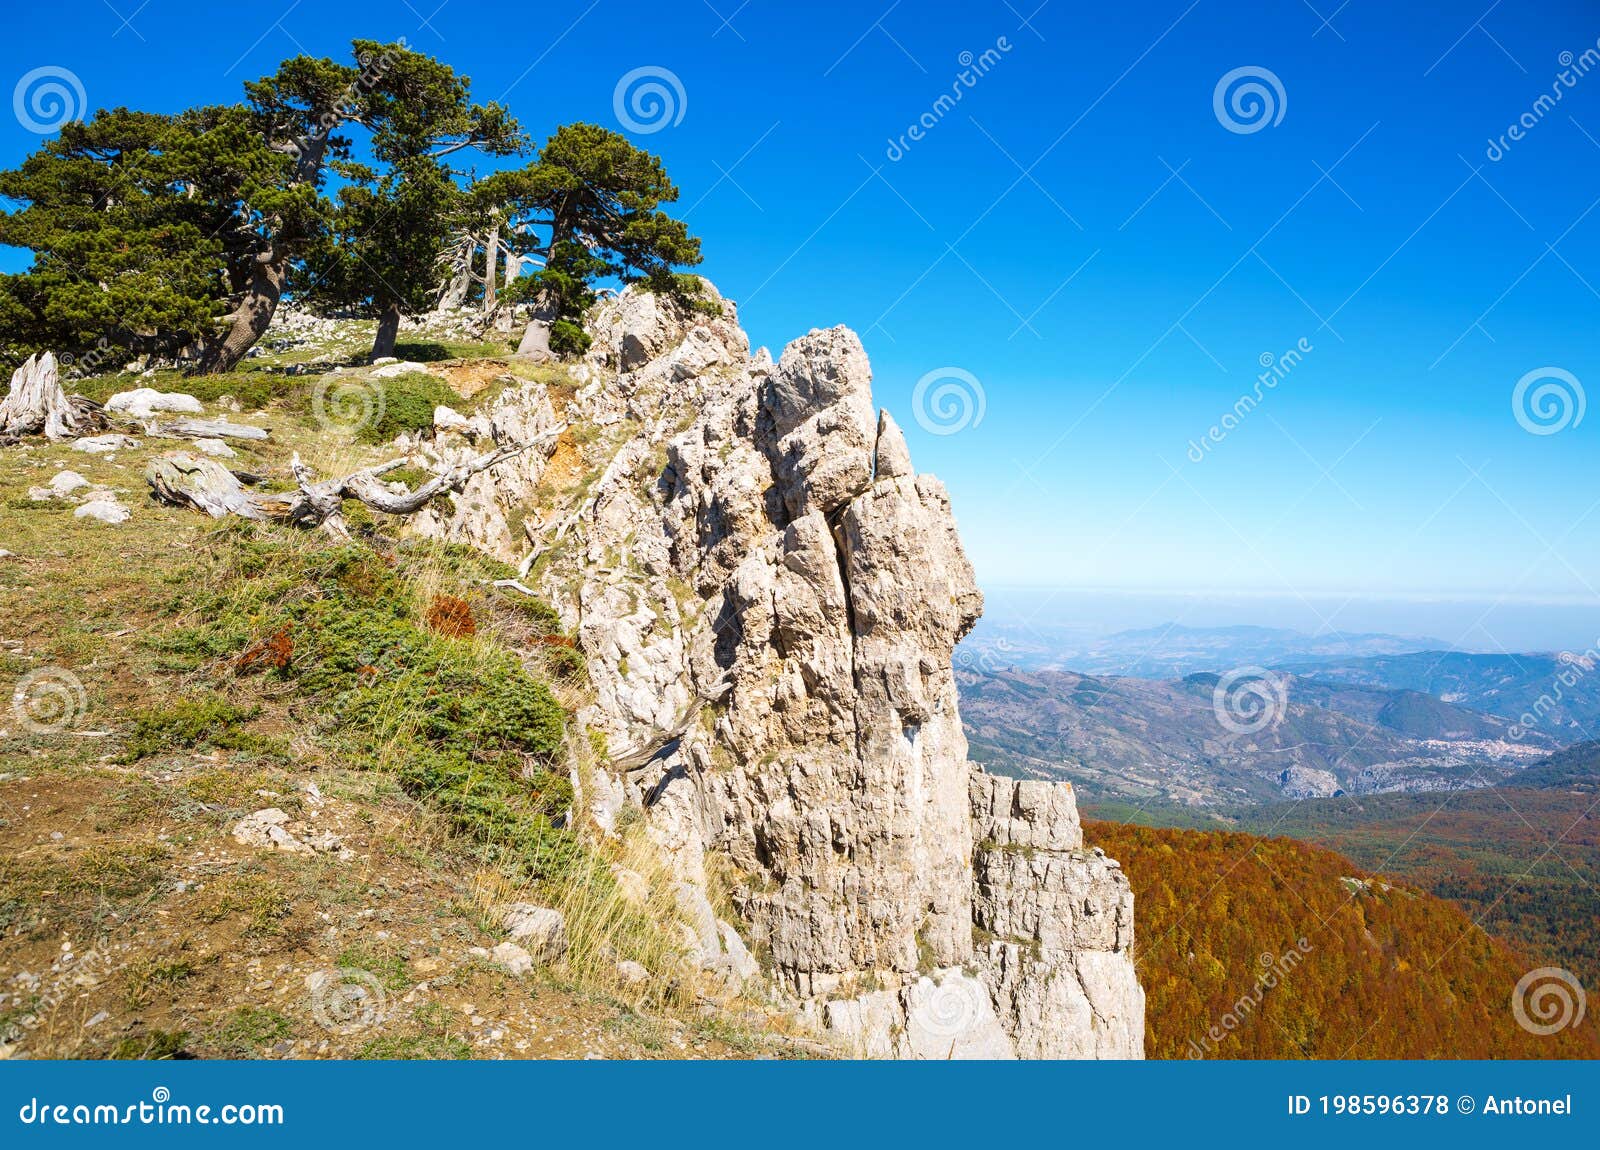 bosnian pines on top of serra di crispo mountain garden of gods,  pollino national park, southern apennine mountains, italy